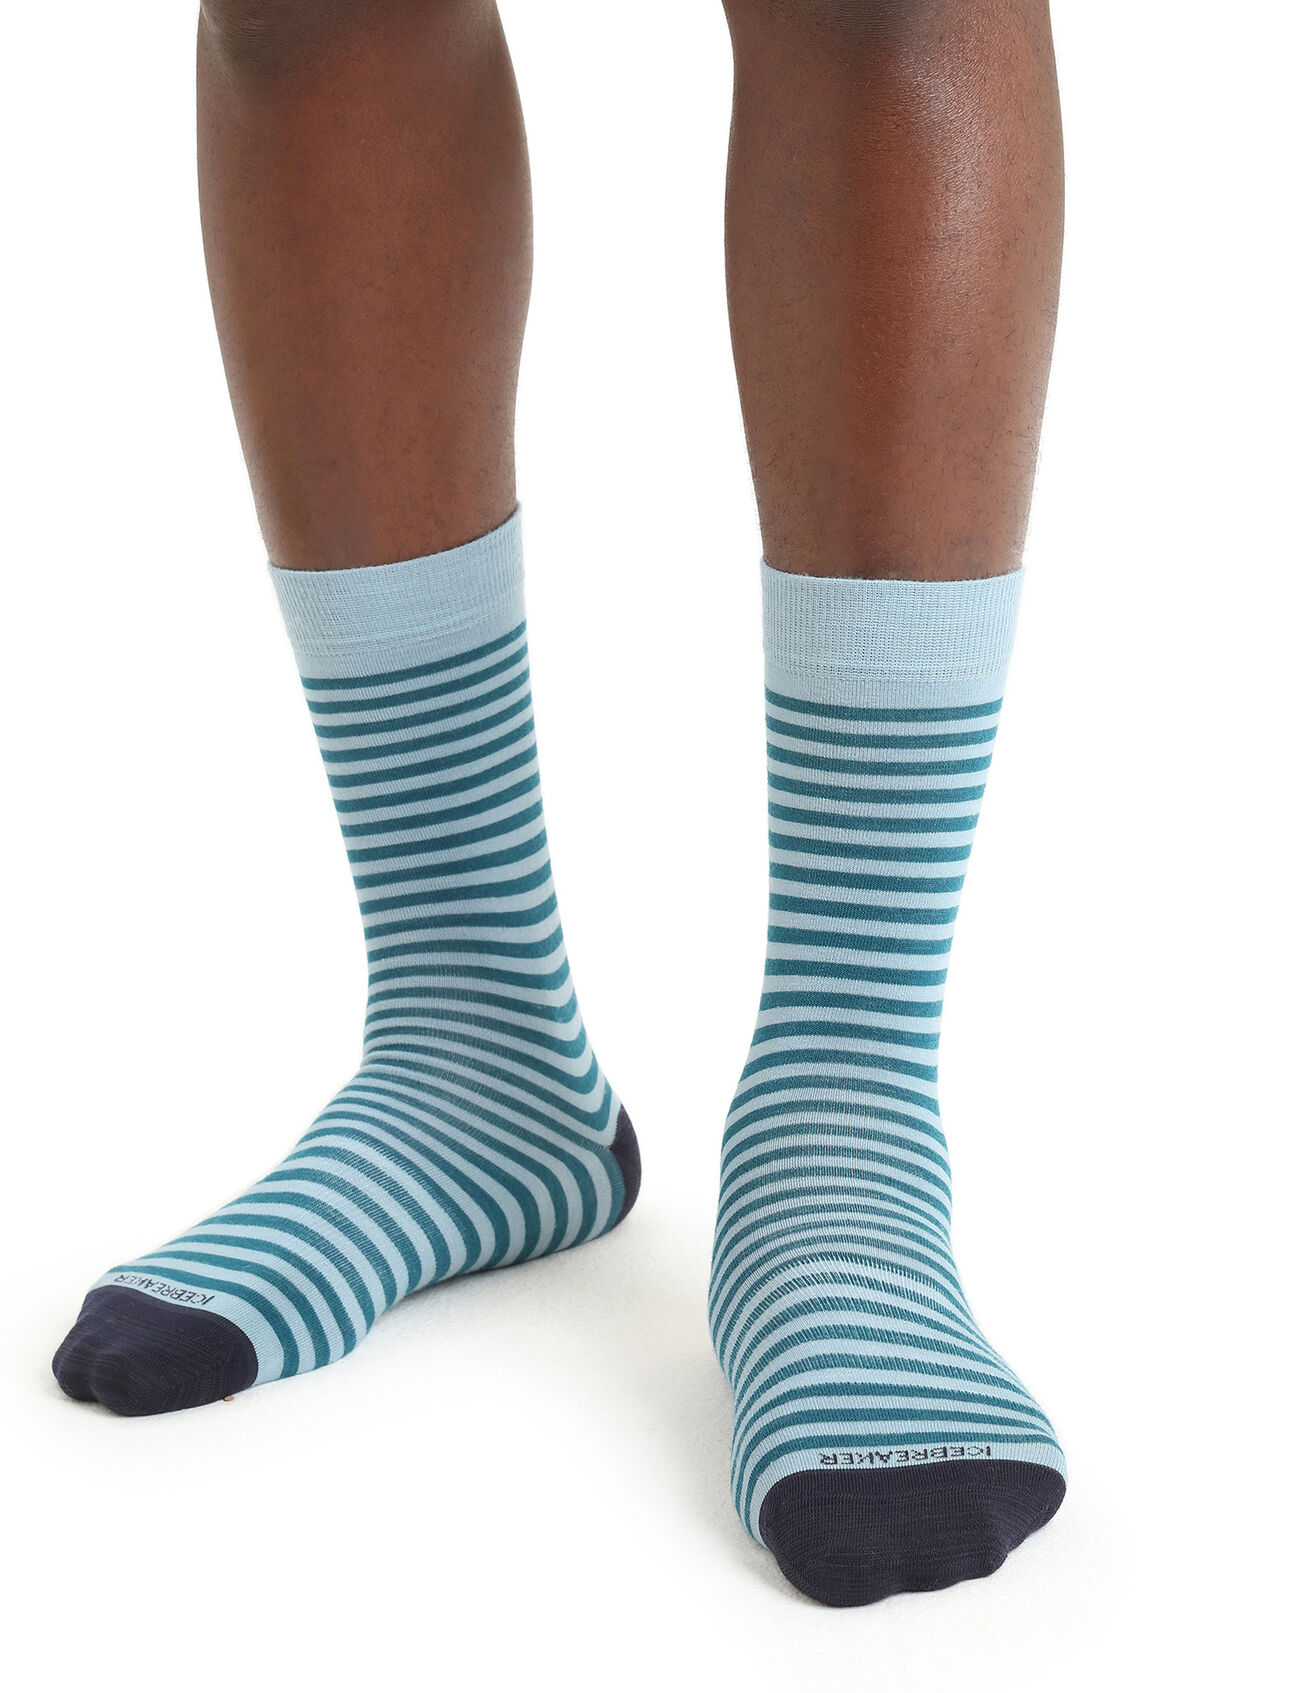 Mens Merino Lifestyle Fine Gauge Crew Stripe Socks Lightweight casual socks perfect for everyday use, the Lifestyle Fine Gauge Crew Stripe combines premium merino wool comfort with a durable construction.